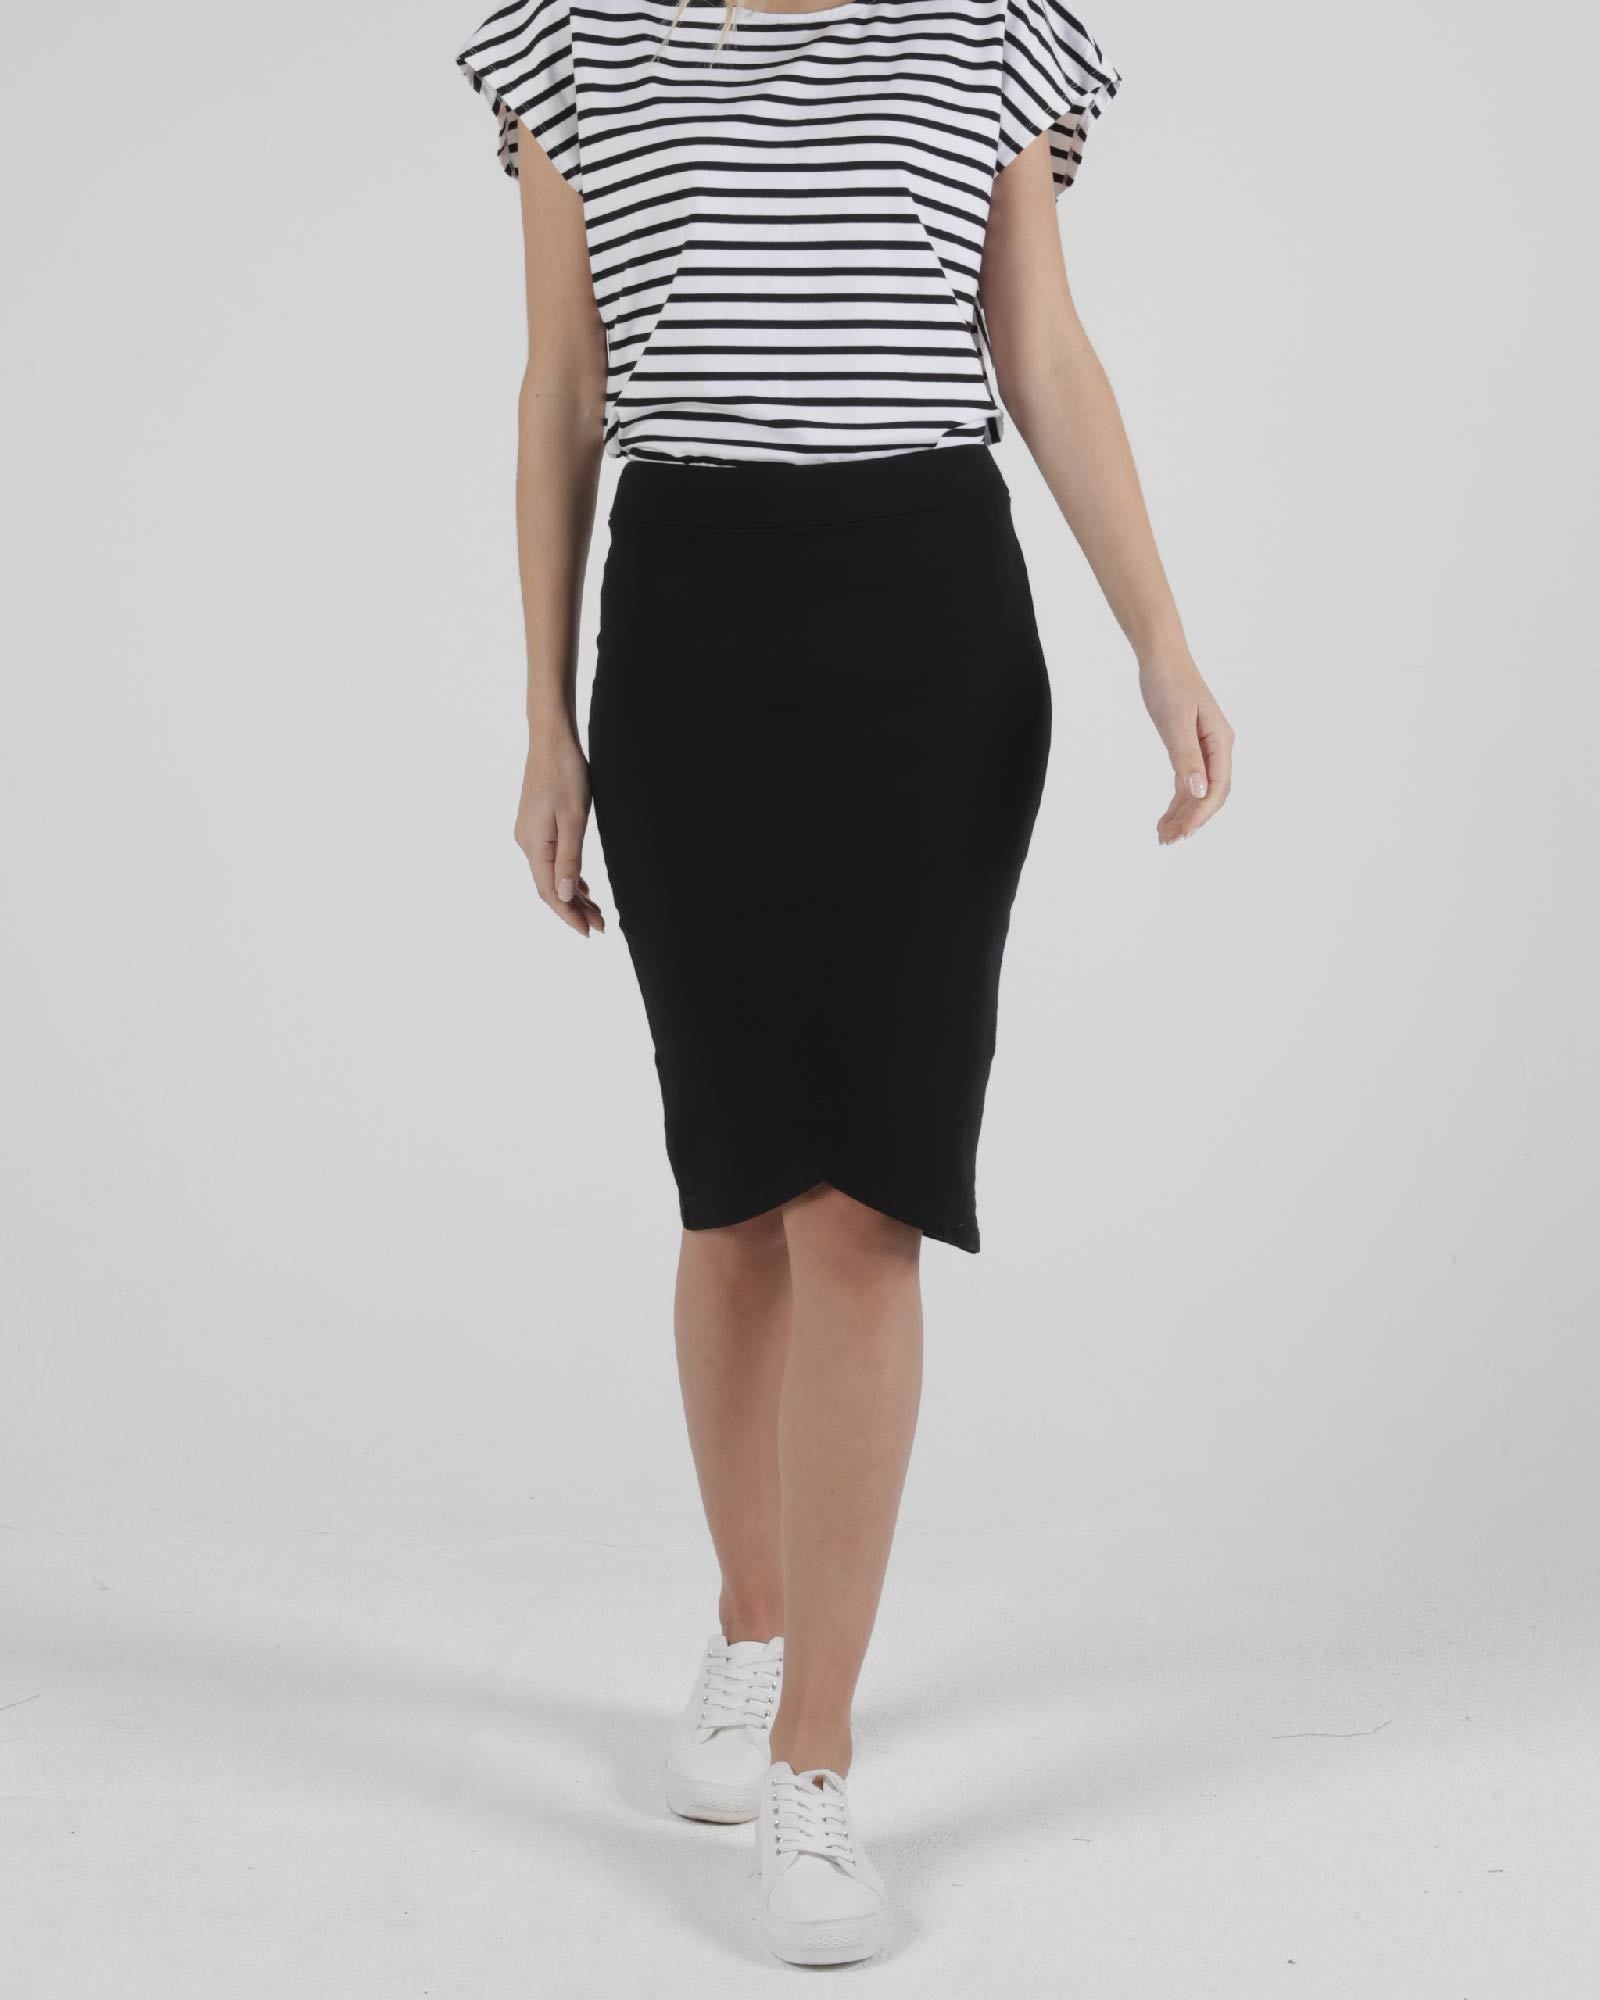 Siri Skirt - Black - Betty Basics - FUDGE Gifts Home Lifestyle